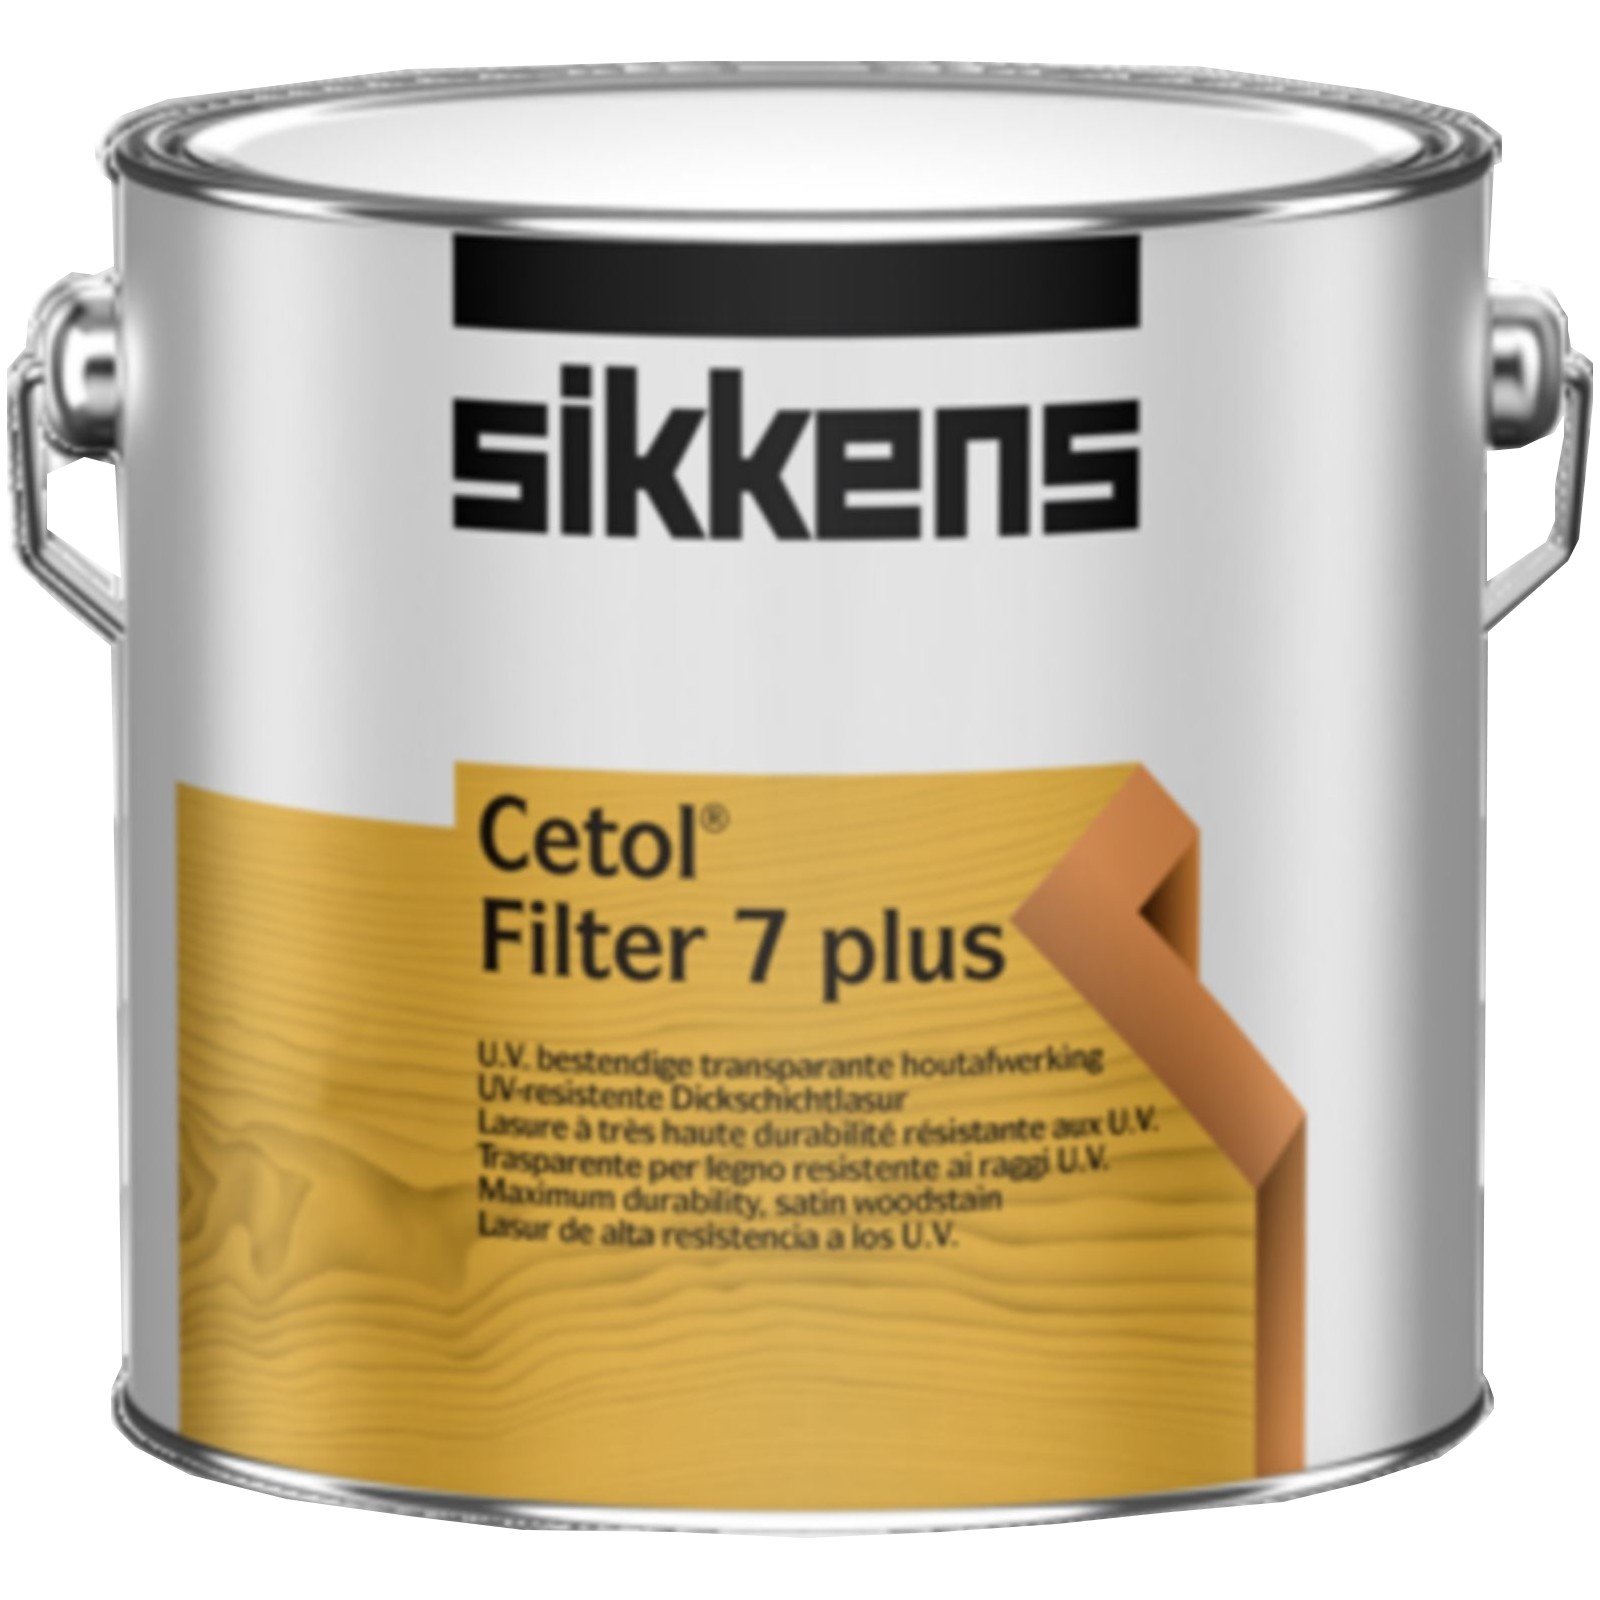 Sikkens 30506 Cetol Filter 7 Plus 2500 L